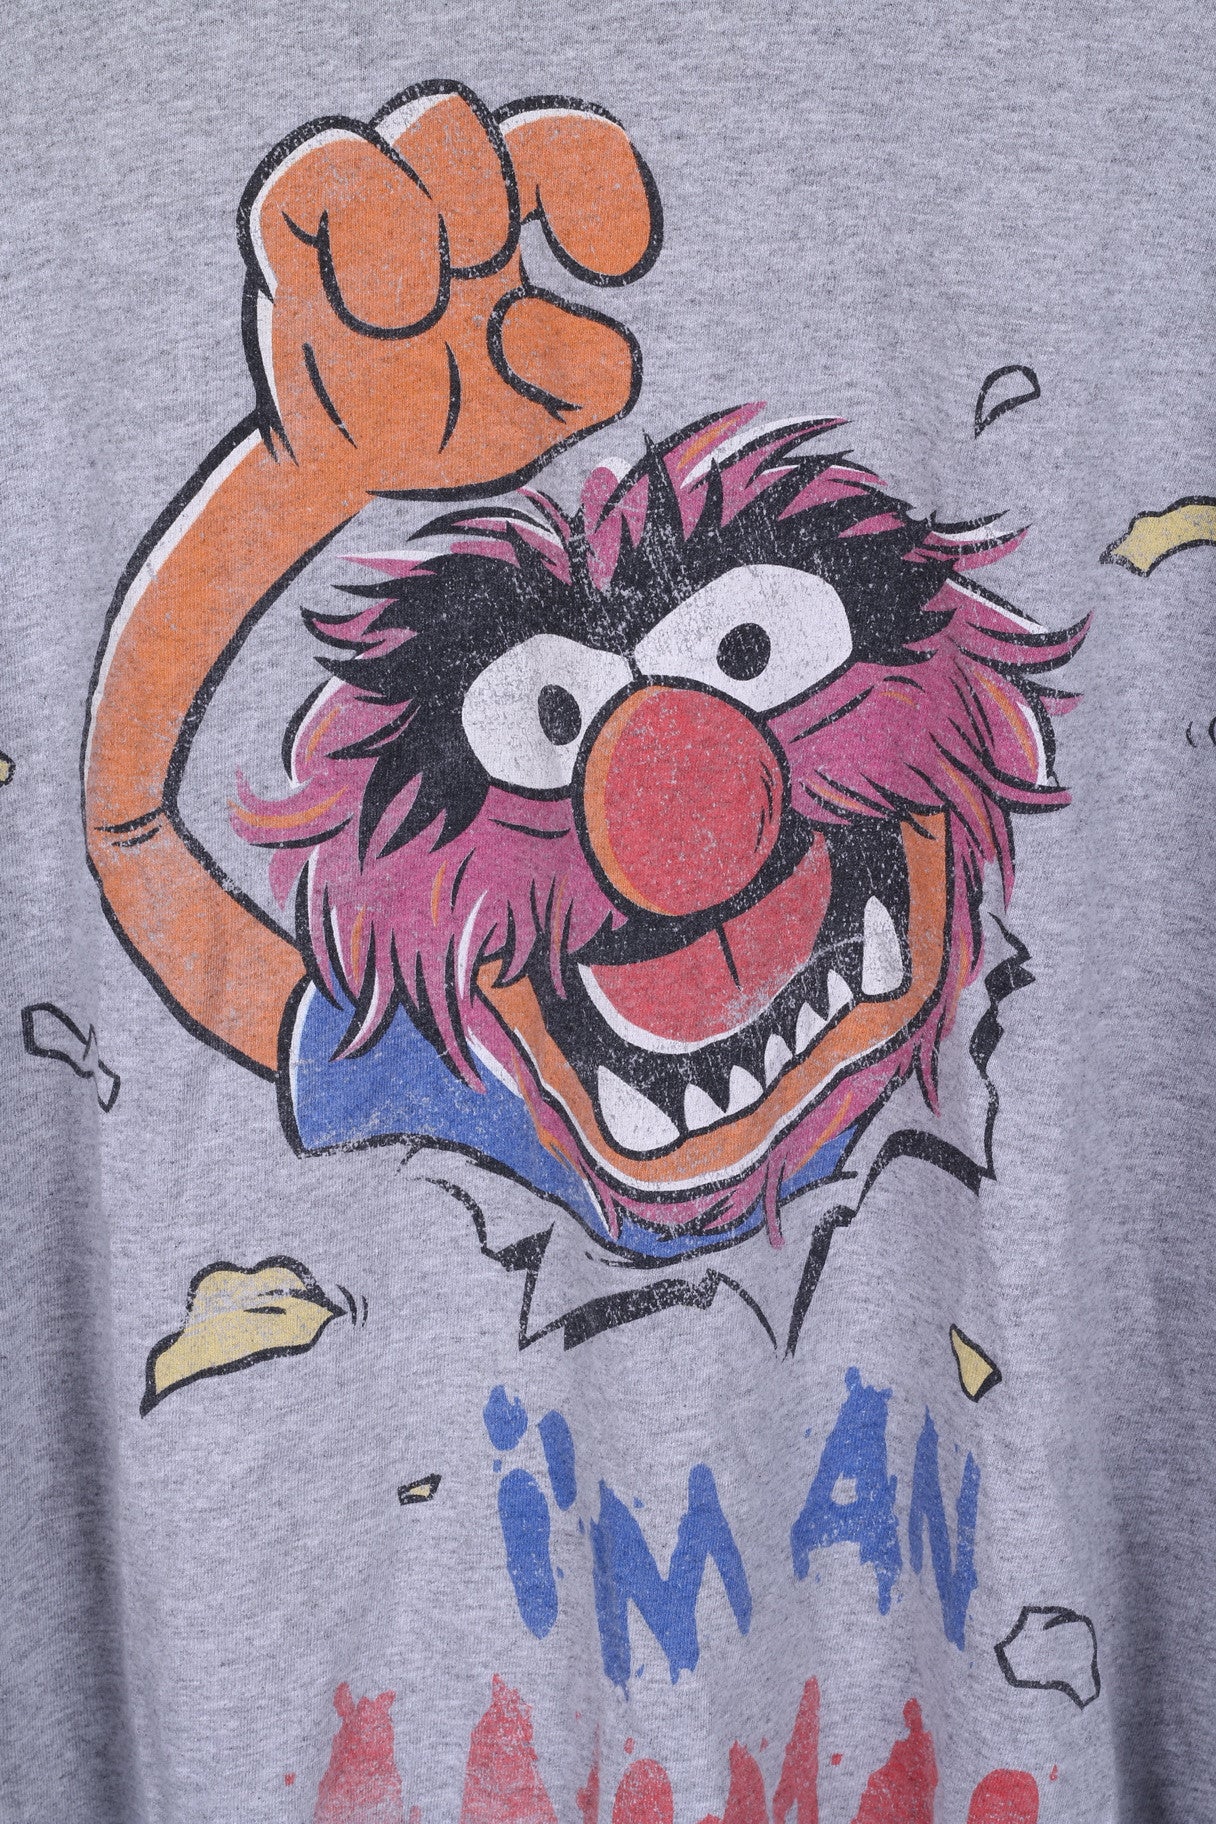 The Muppets Mens XL T-Shirt Grey Animal Cotton Short Sleeve Show